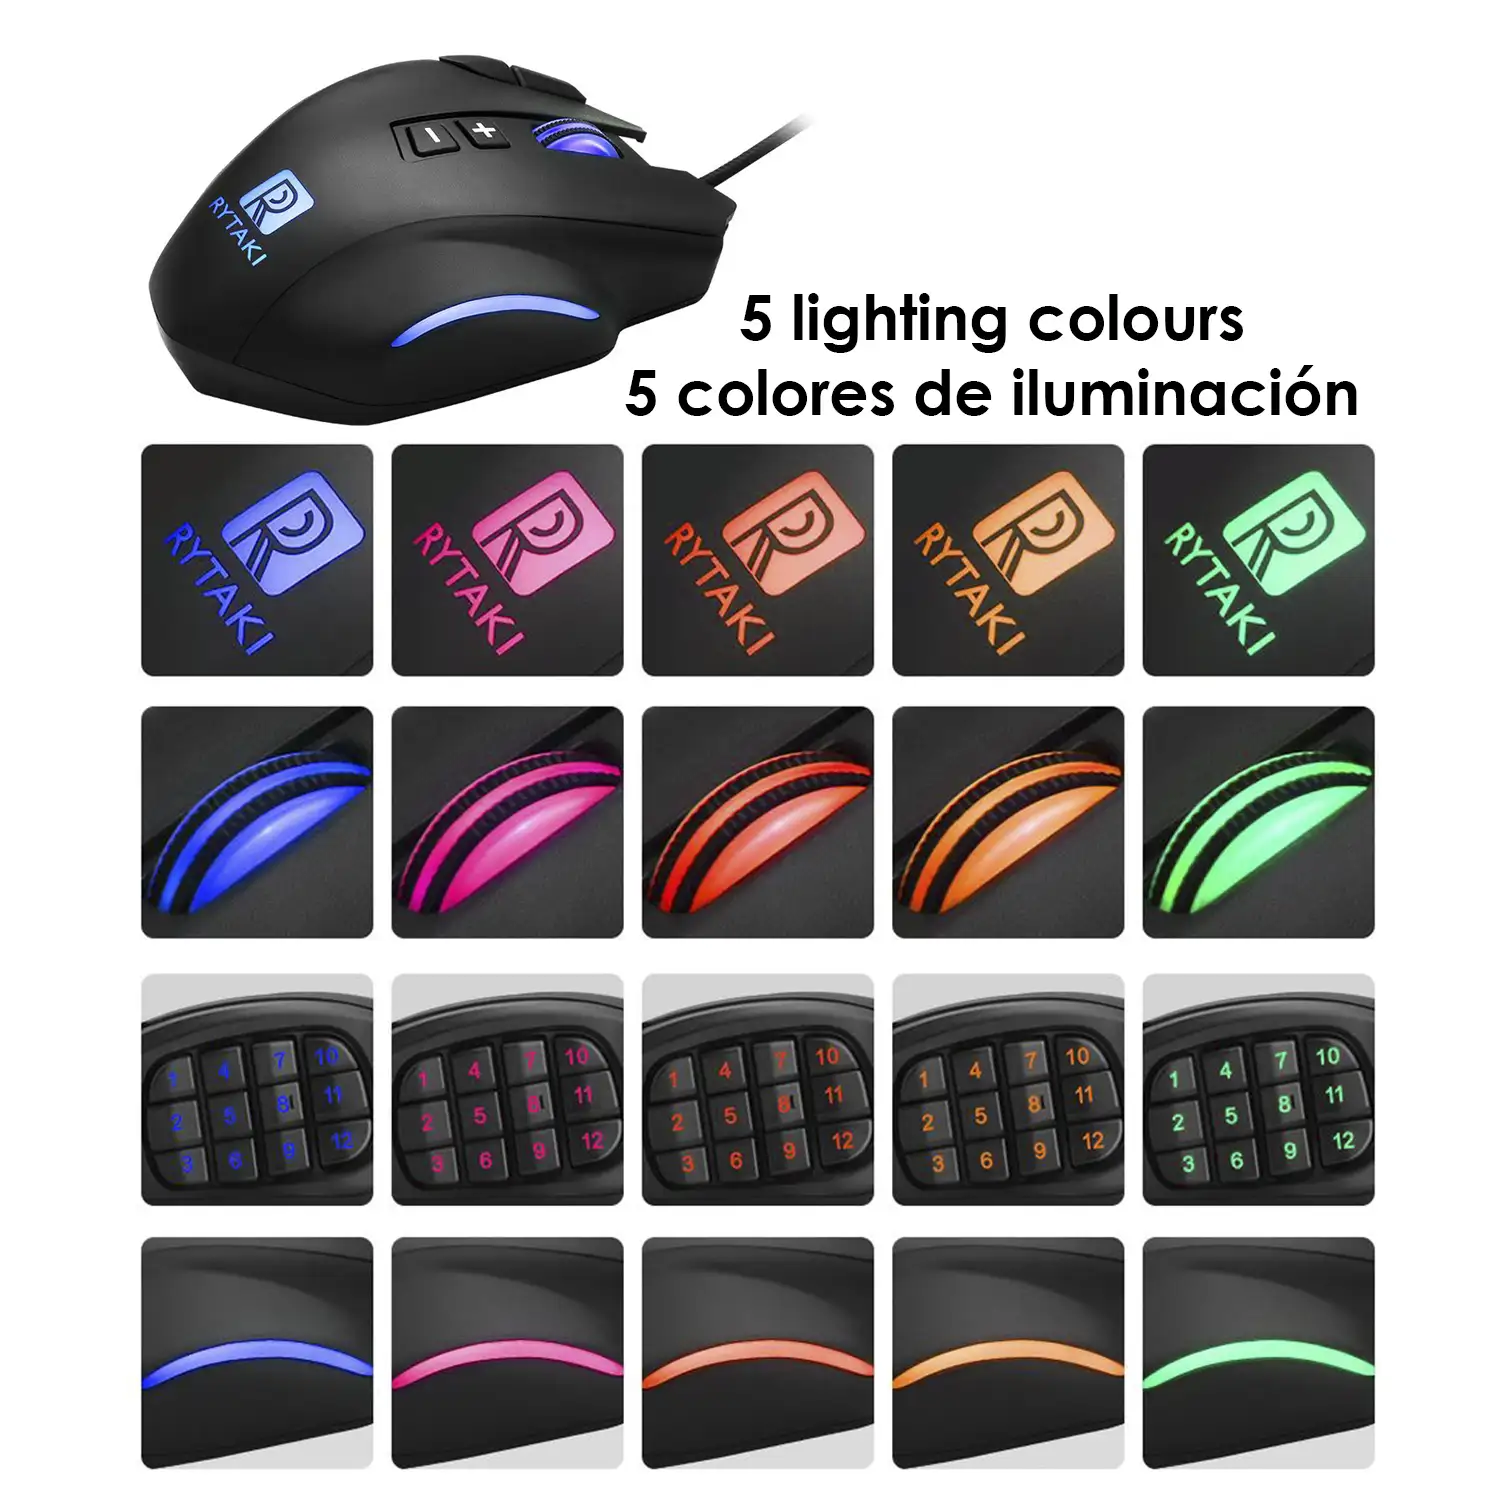 Ratón gaming R6, hasta 16.400DPI, 19 botones programables, peso ajustable. Iluminación LED RGB.